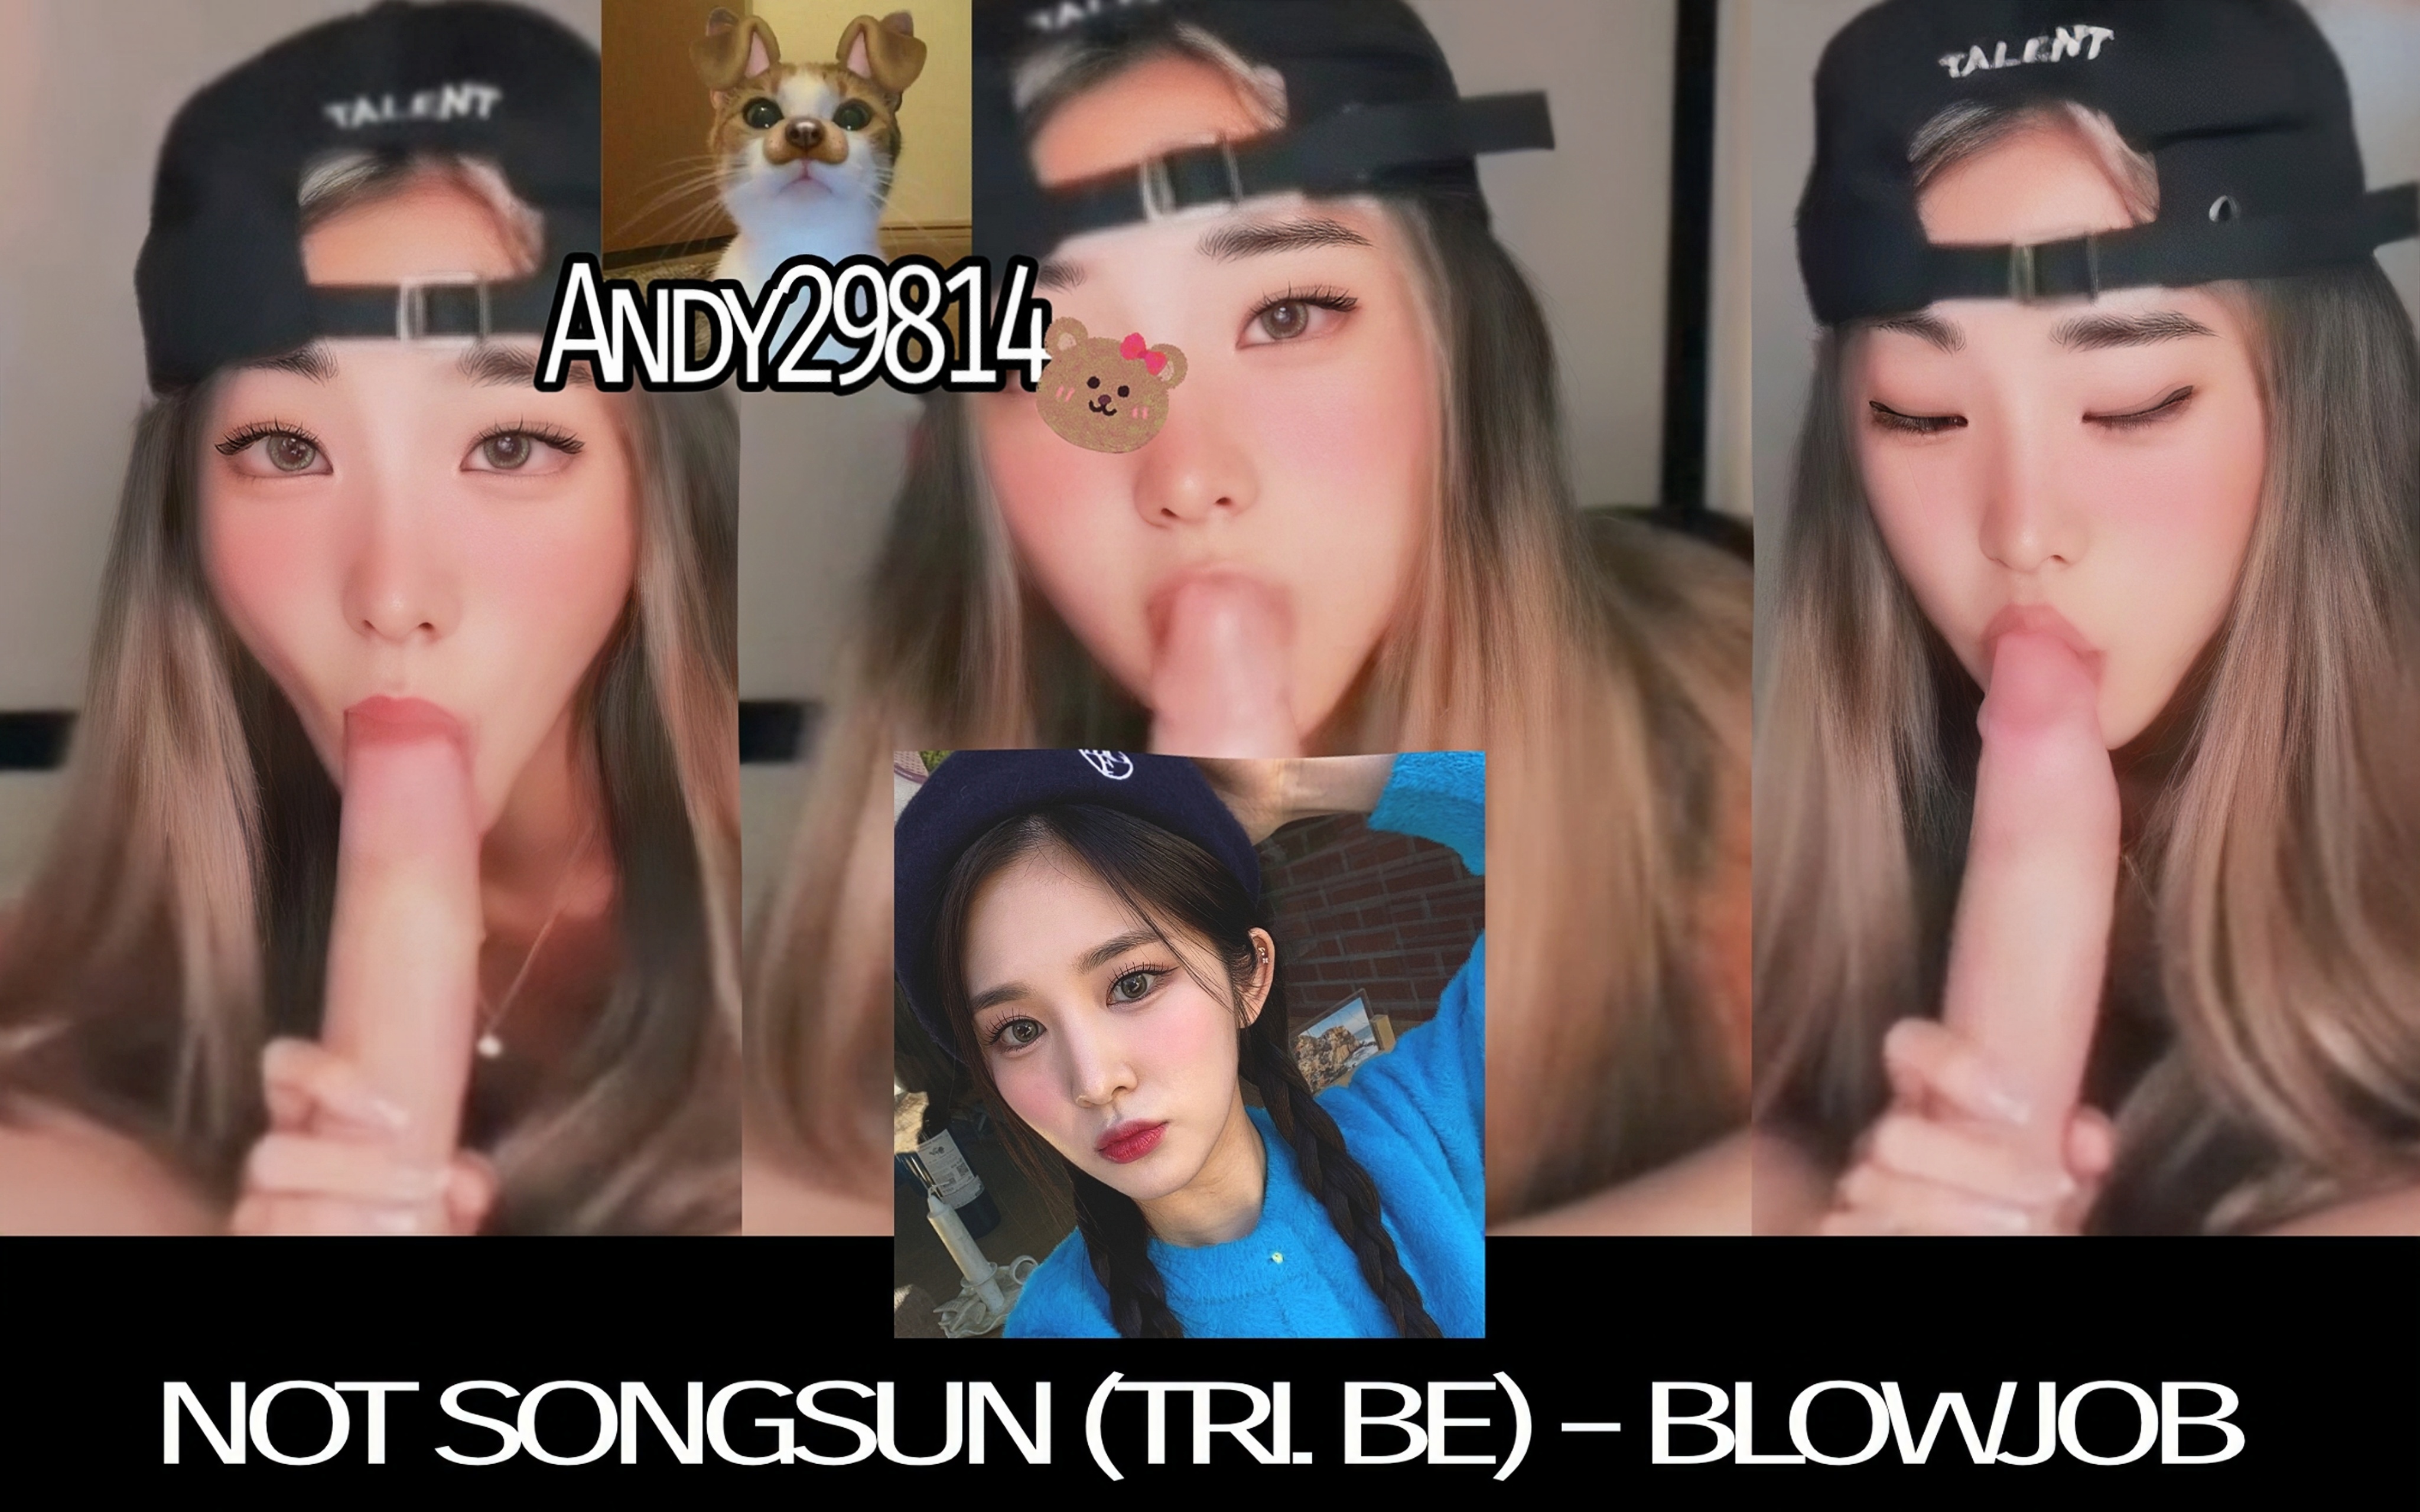 Not SongSun (TRI. BE) - Blowjob Boyfriend